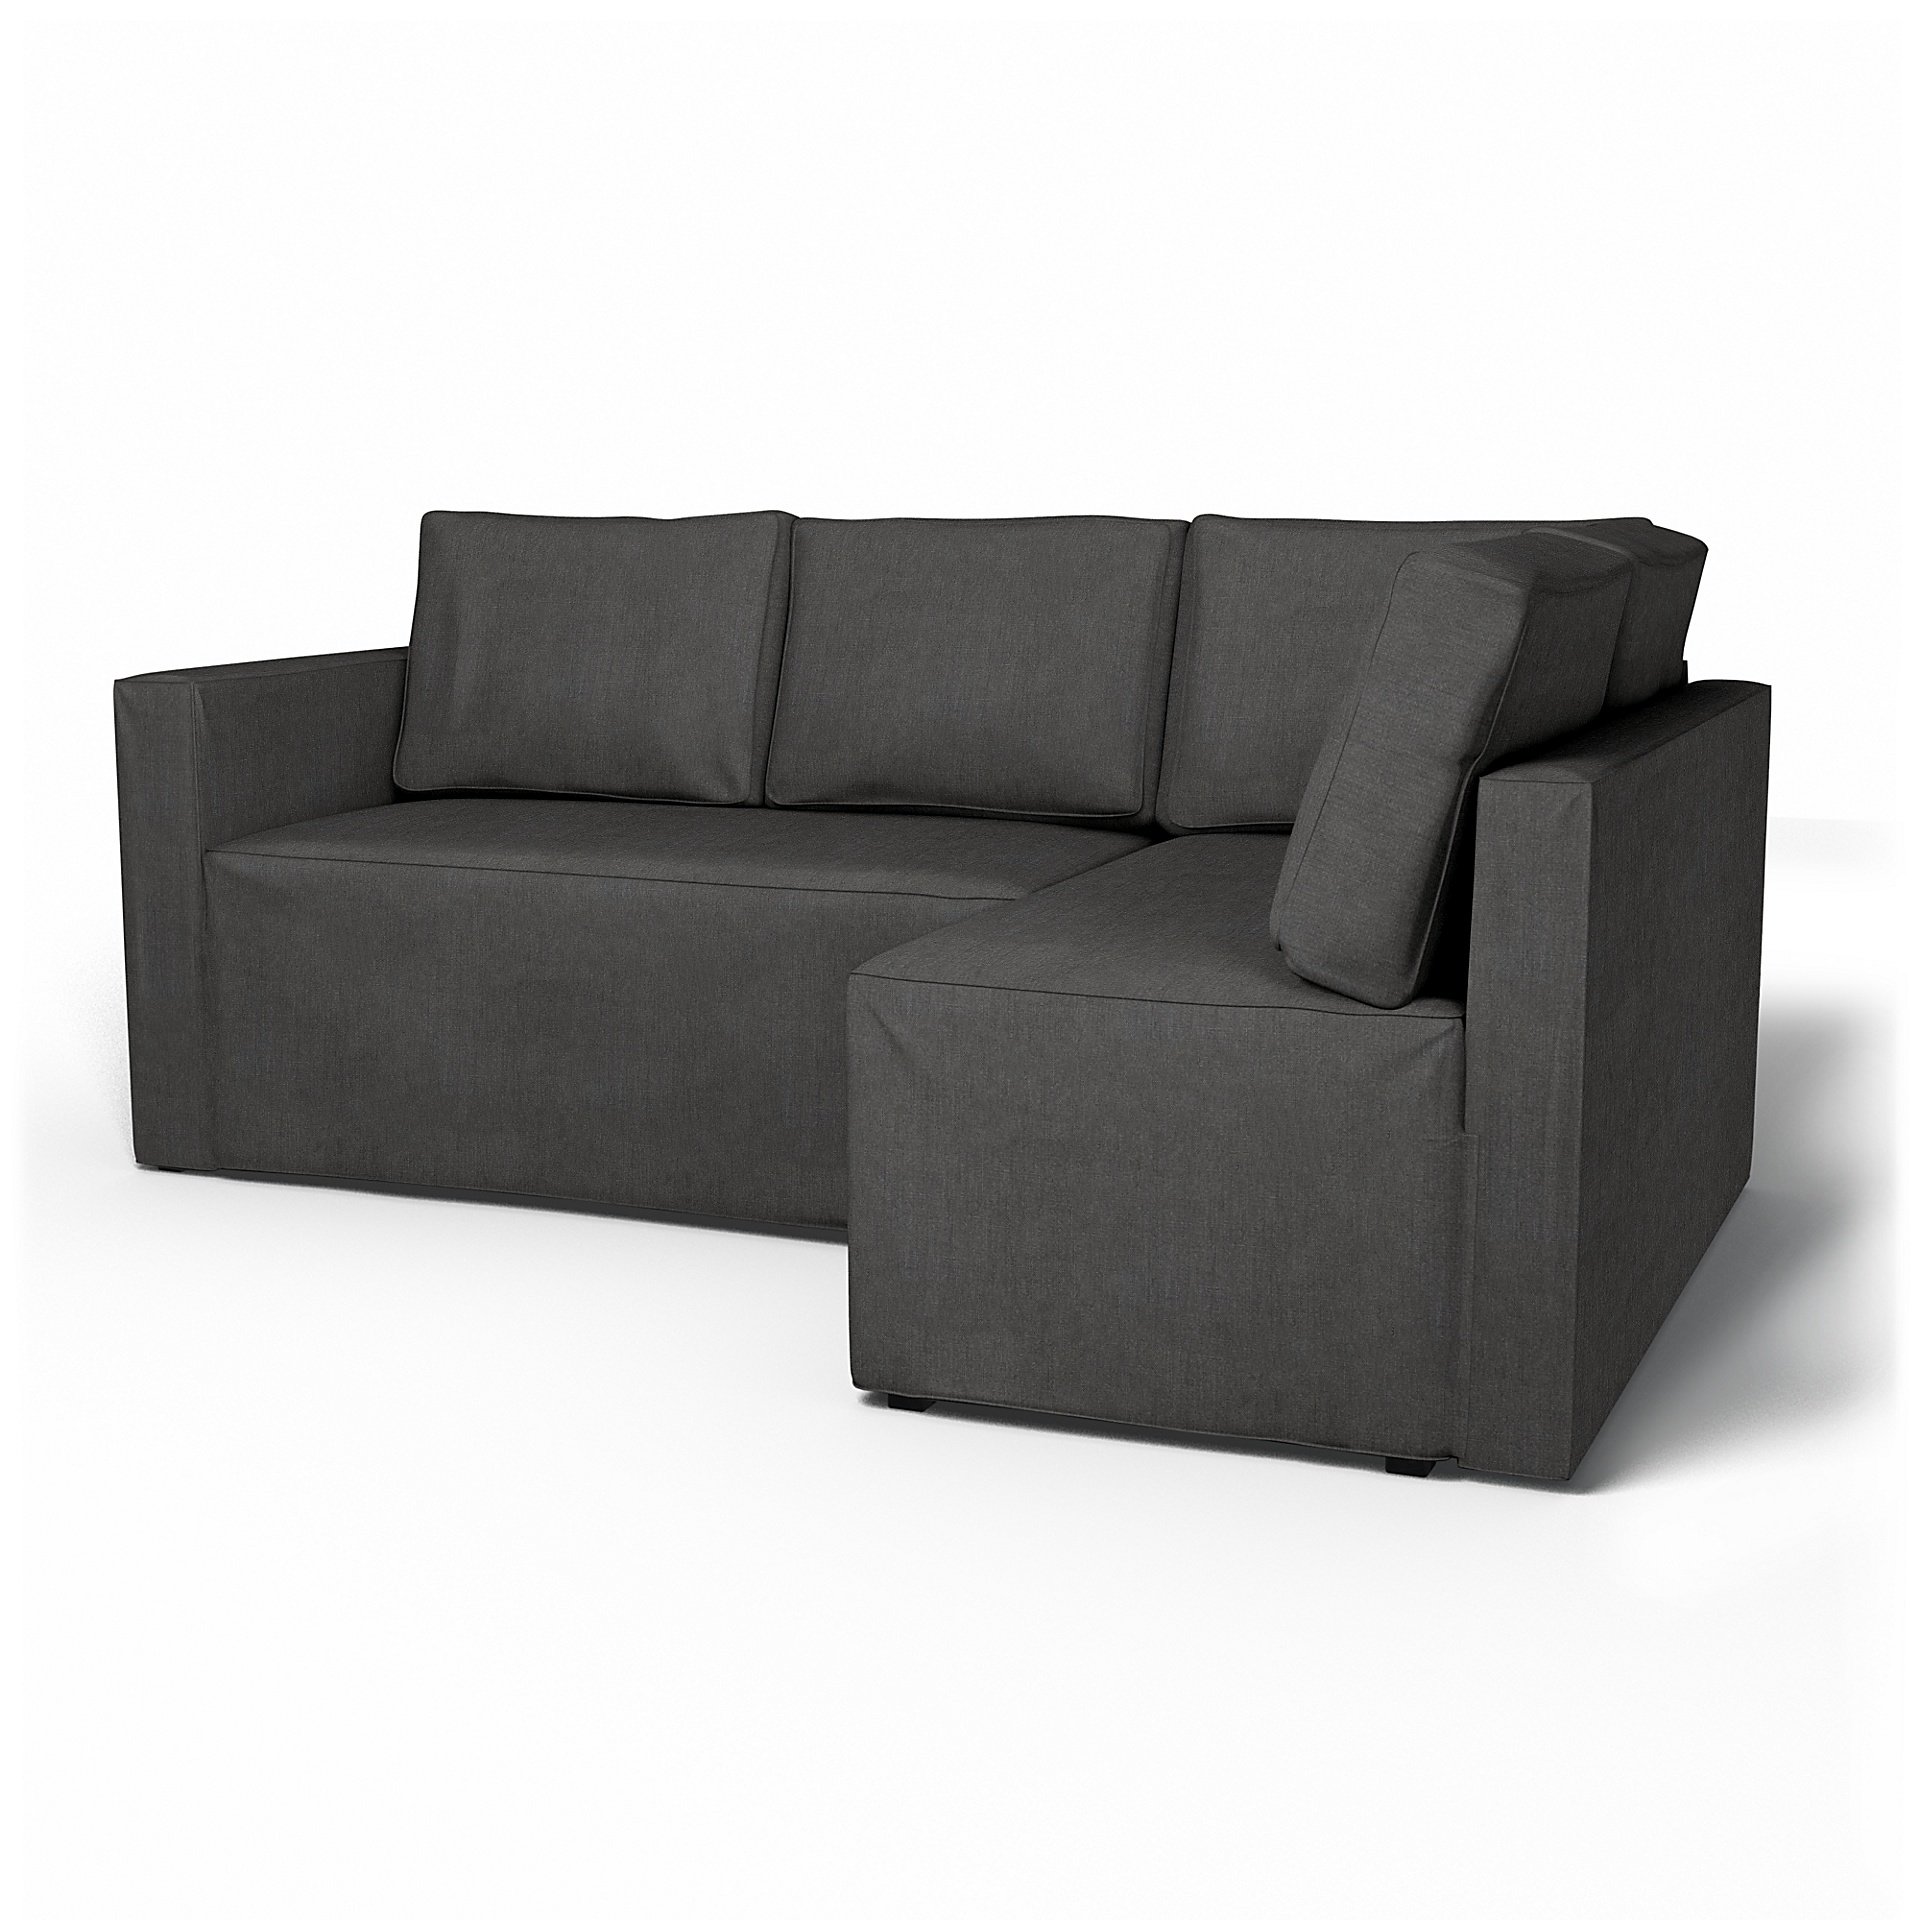 IKEA - Fagelbo Sofa Bed with Right Chaise Cover, Espresso, Linen - Bemz